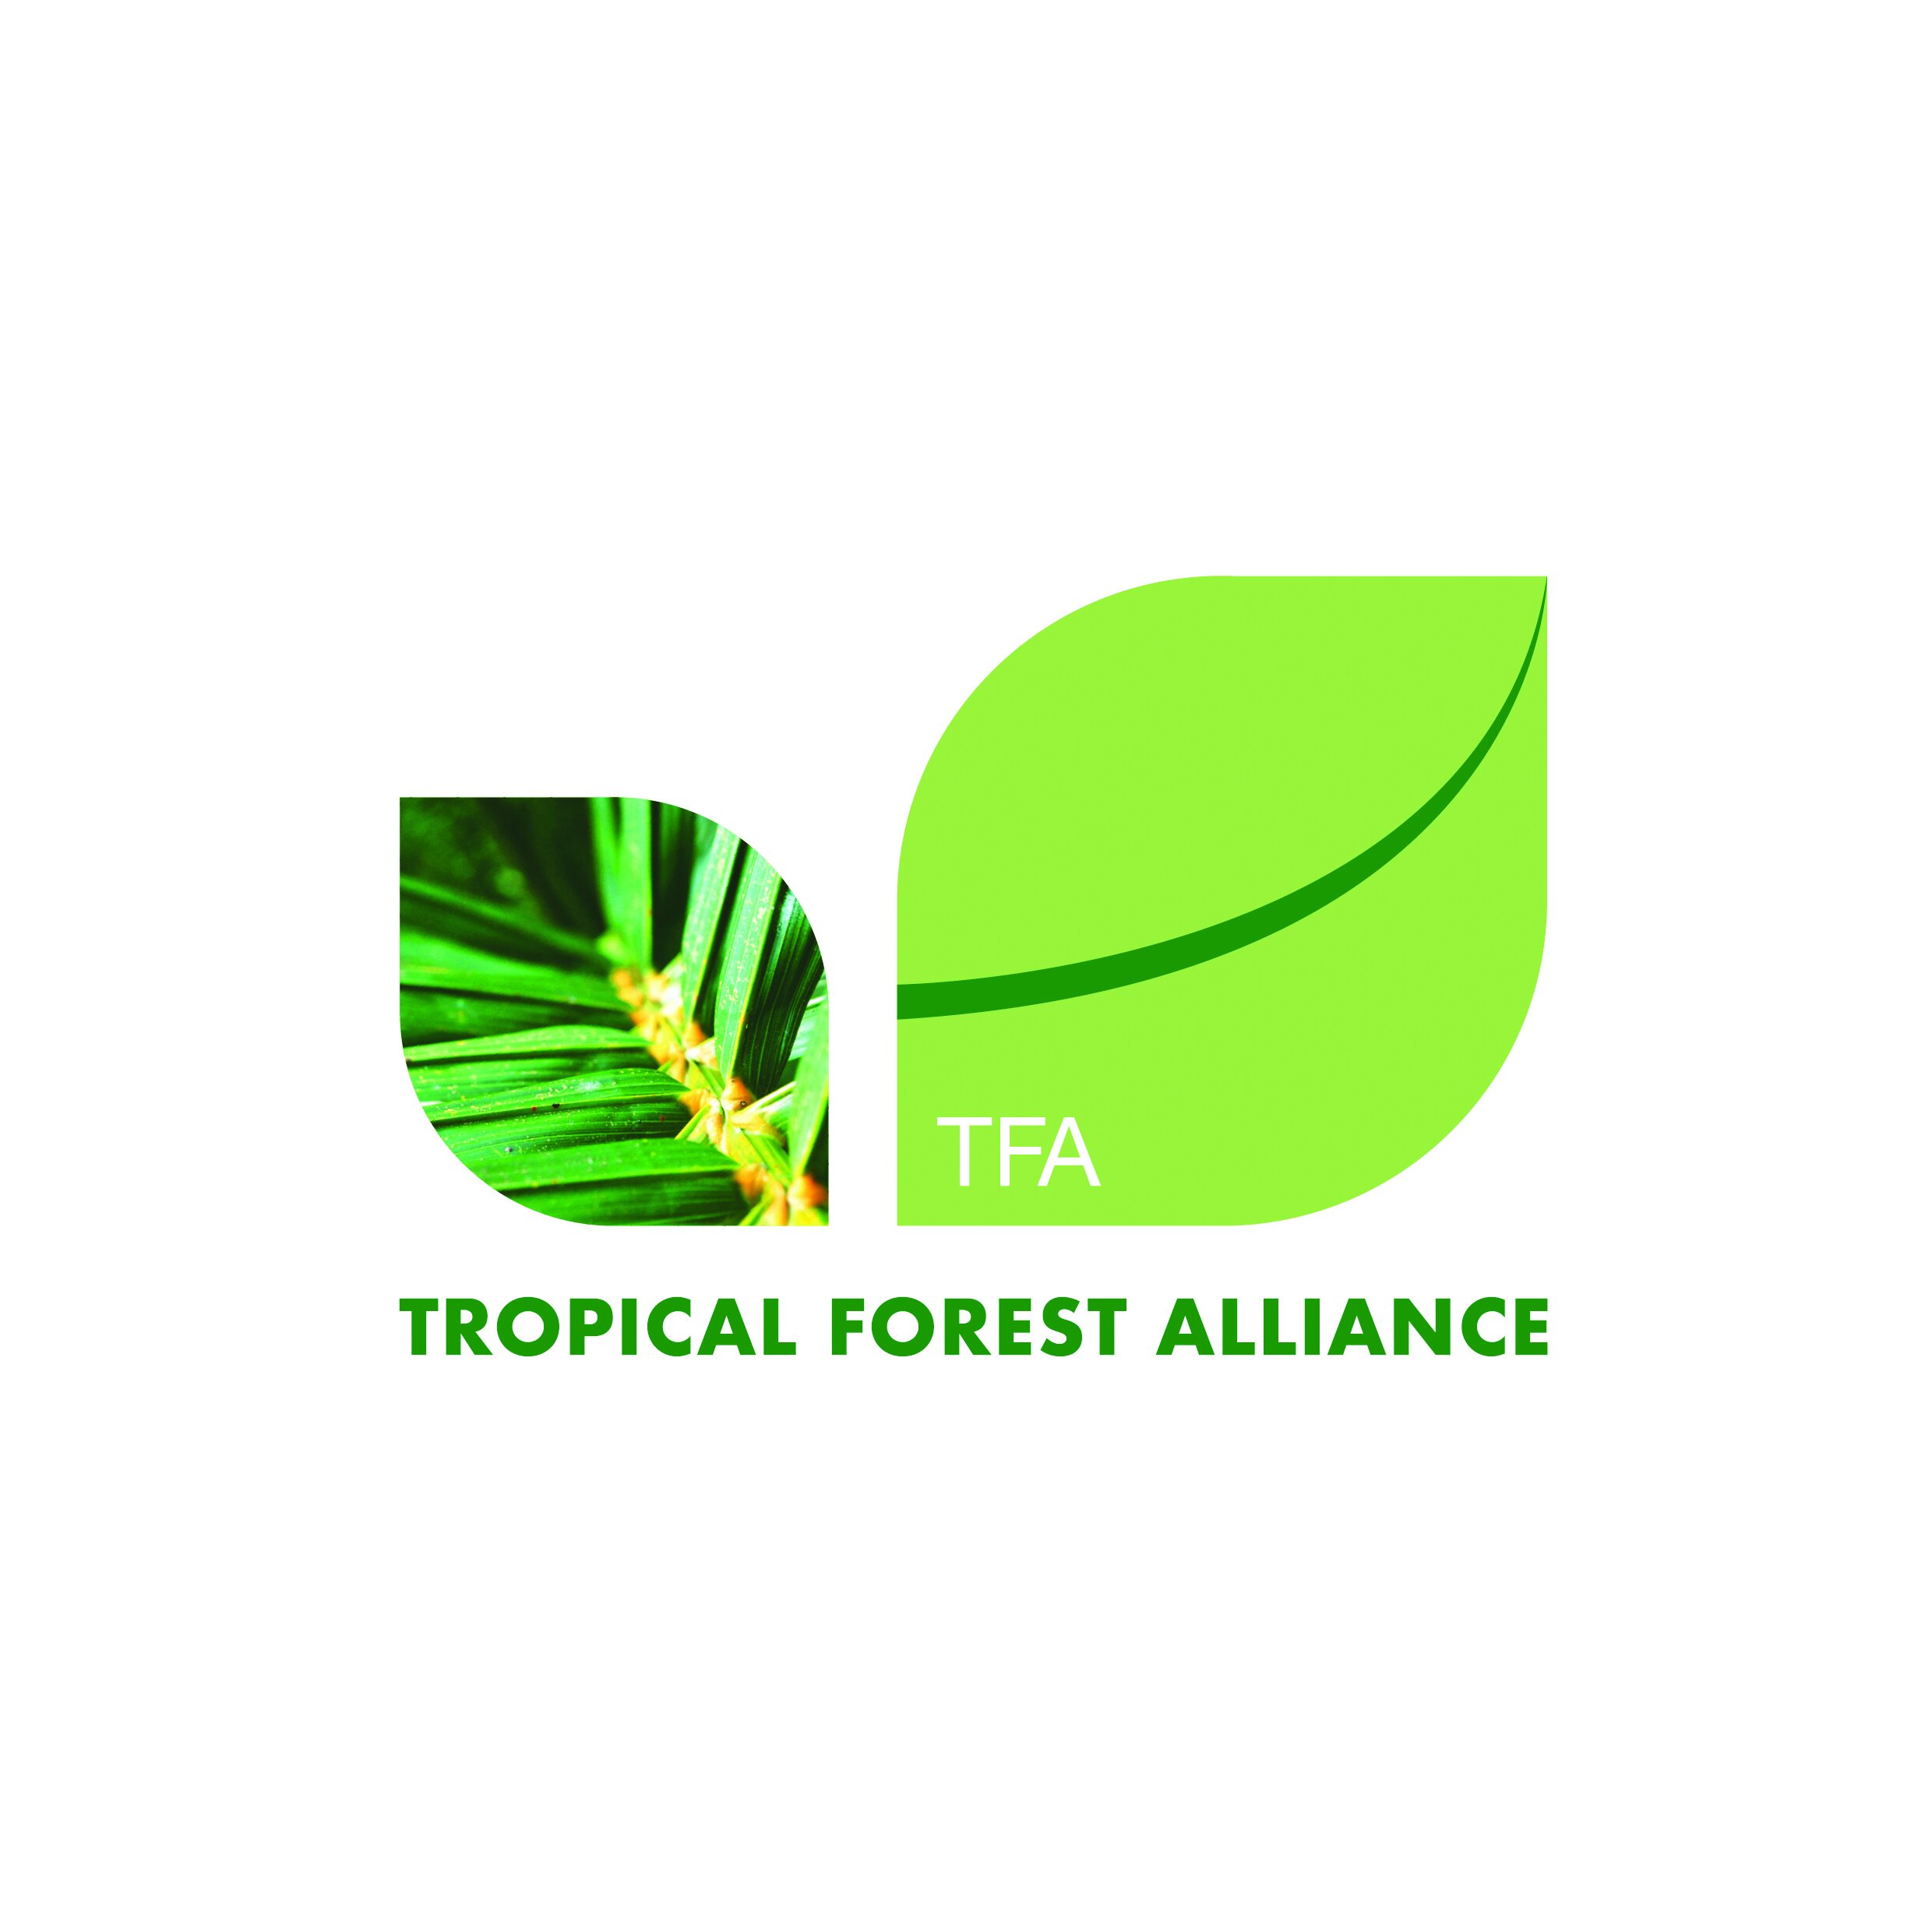 Tropical forest alliance_TFA.jpg